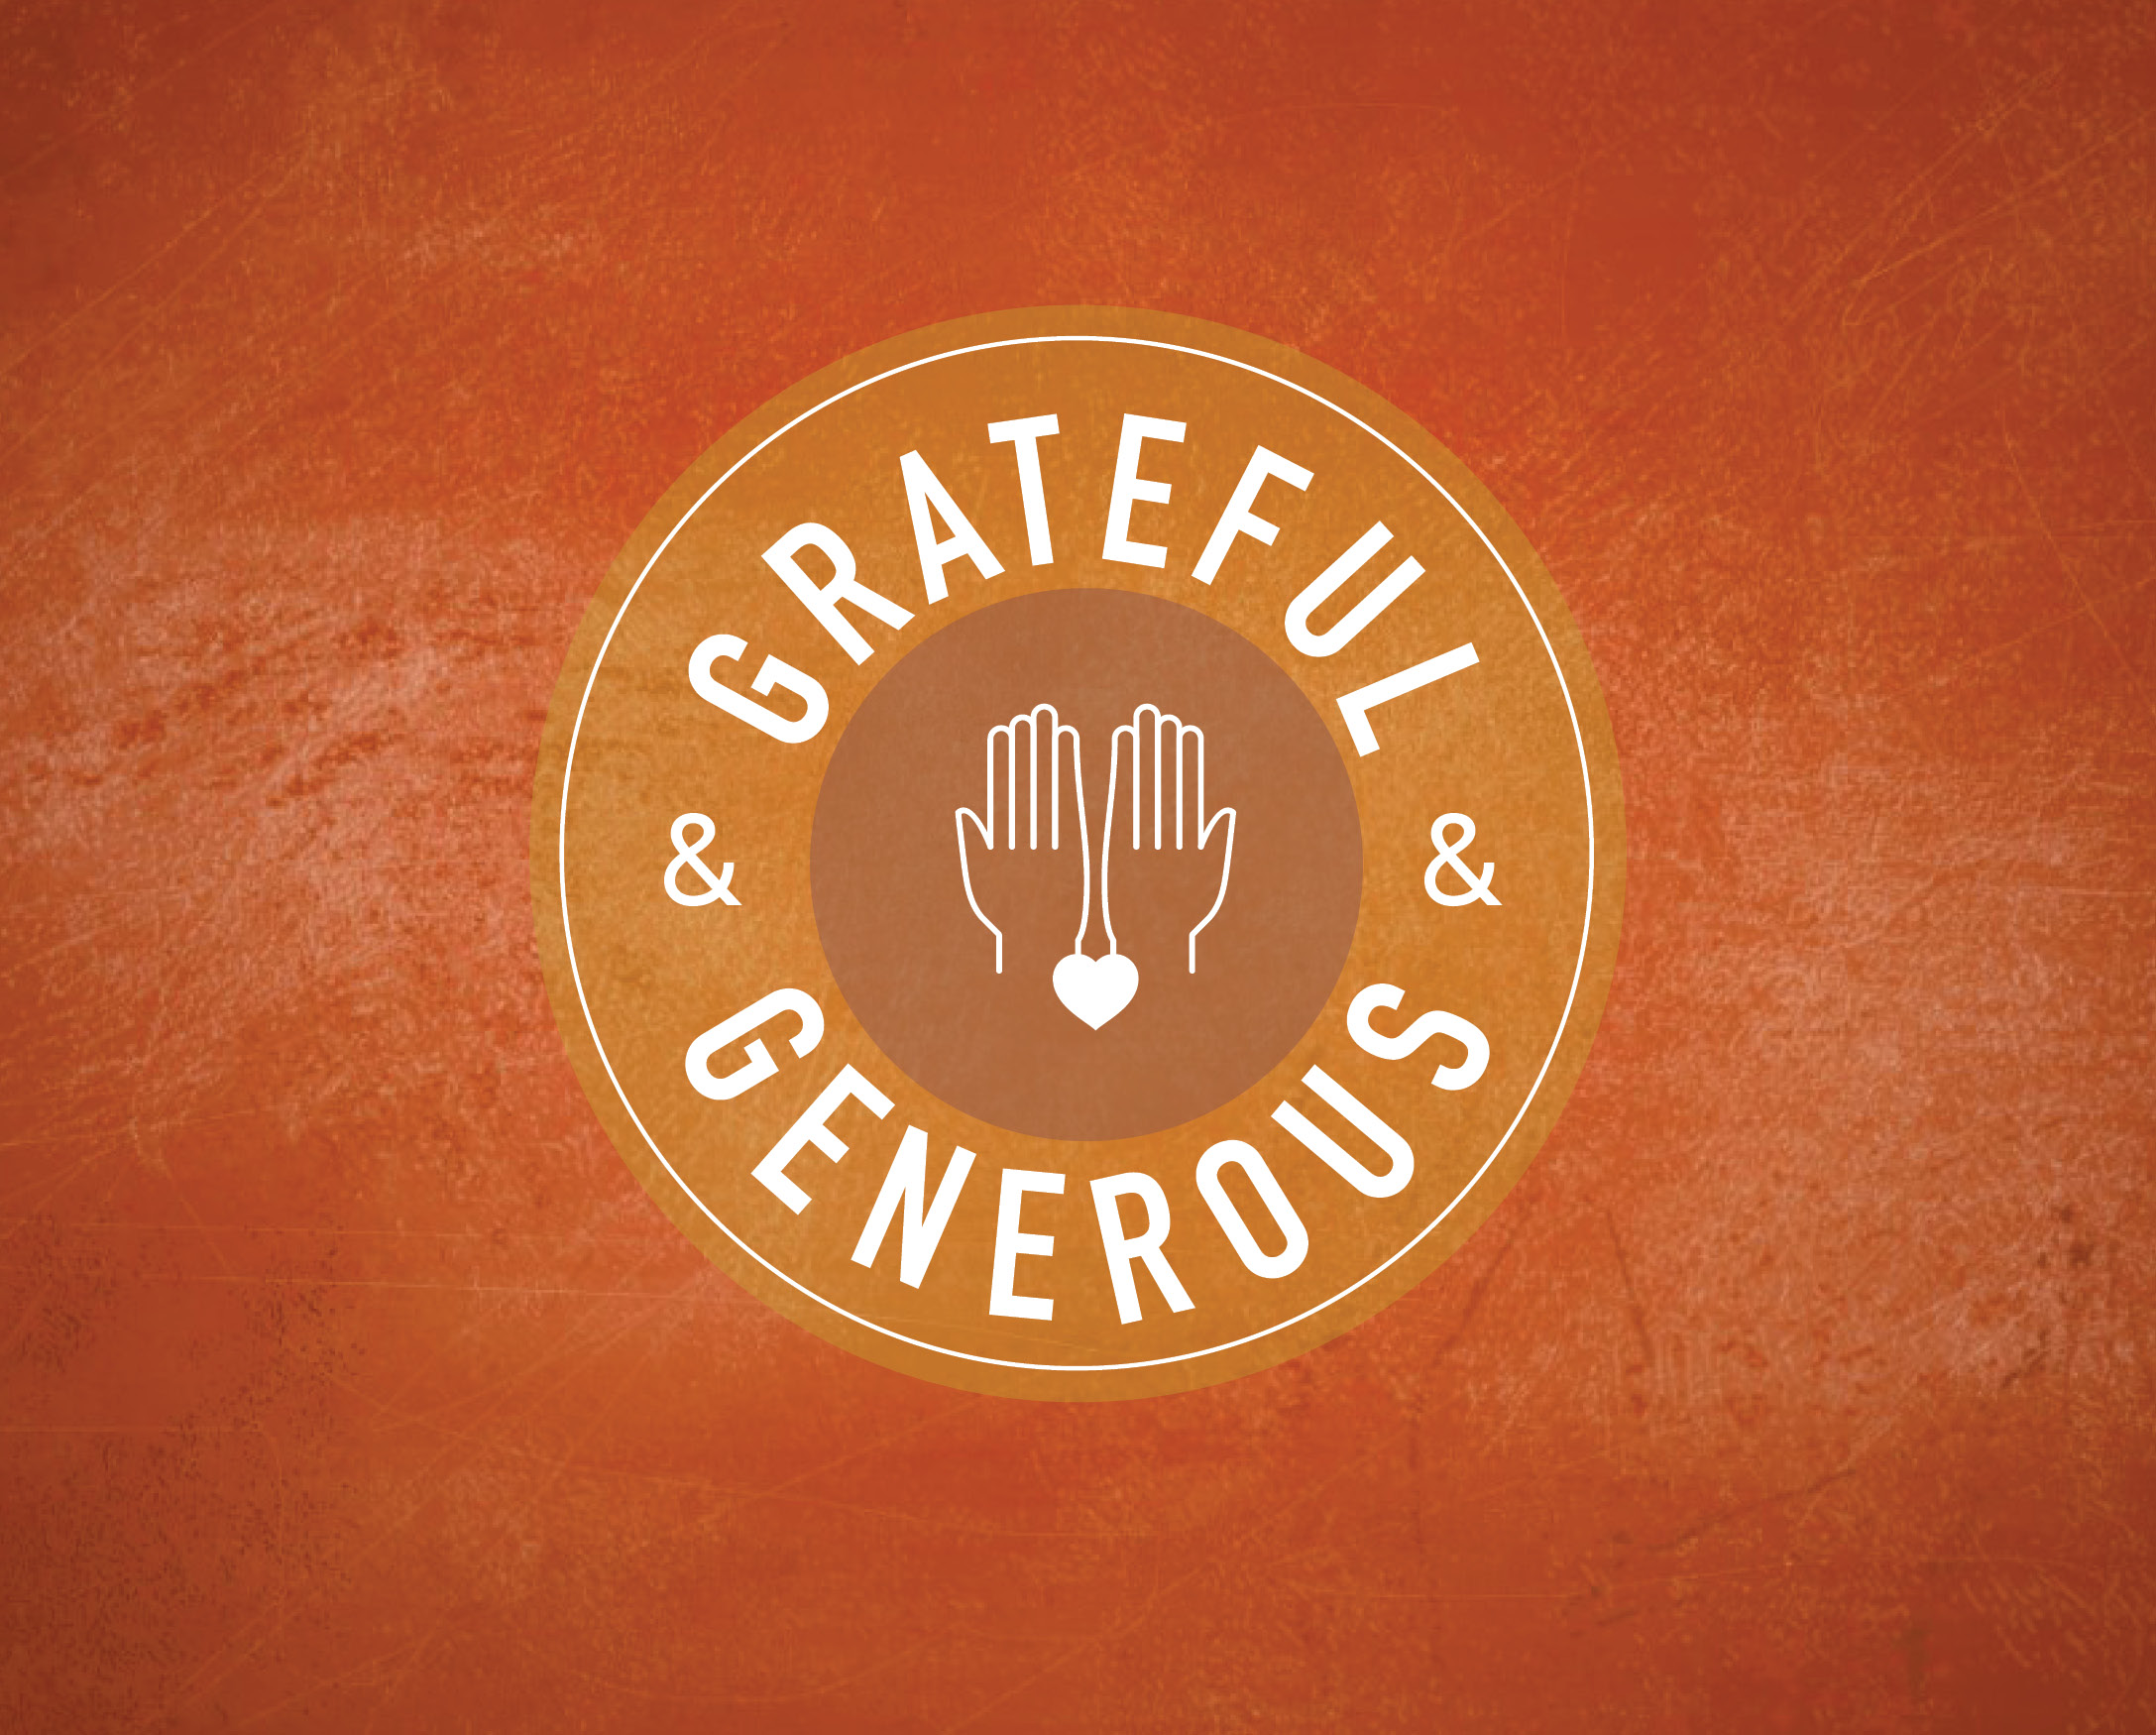 Grateful & Generous: Generous Tithers